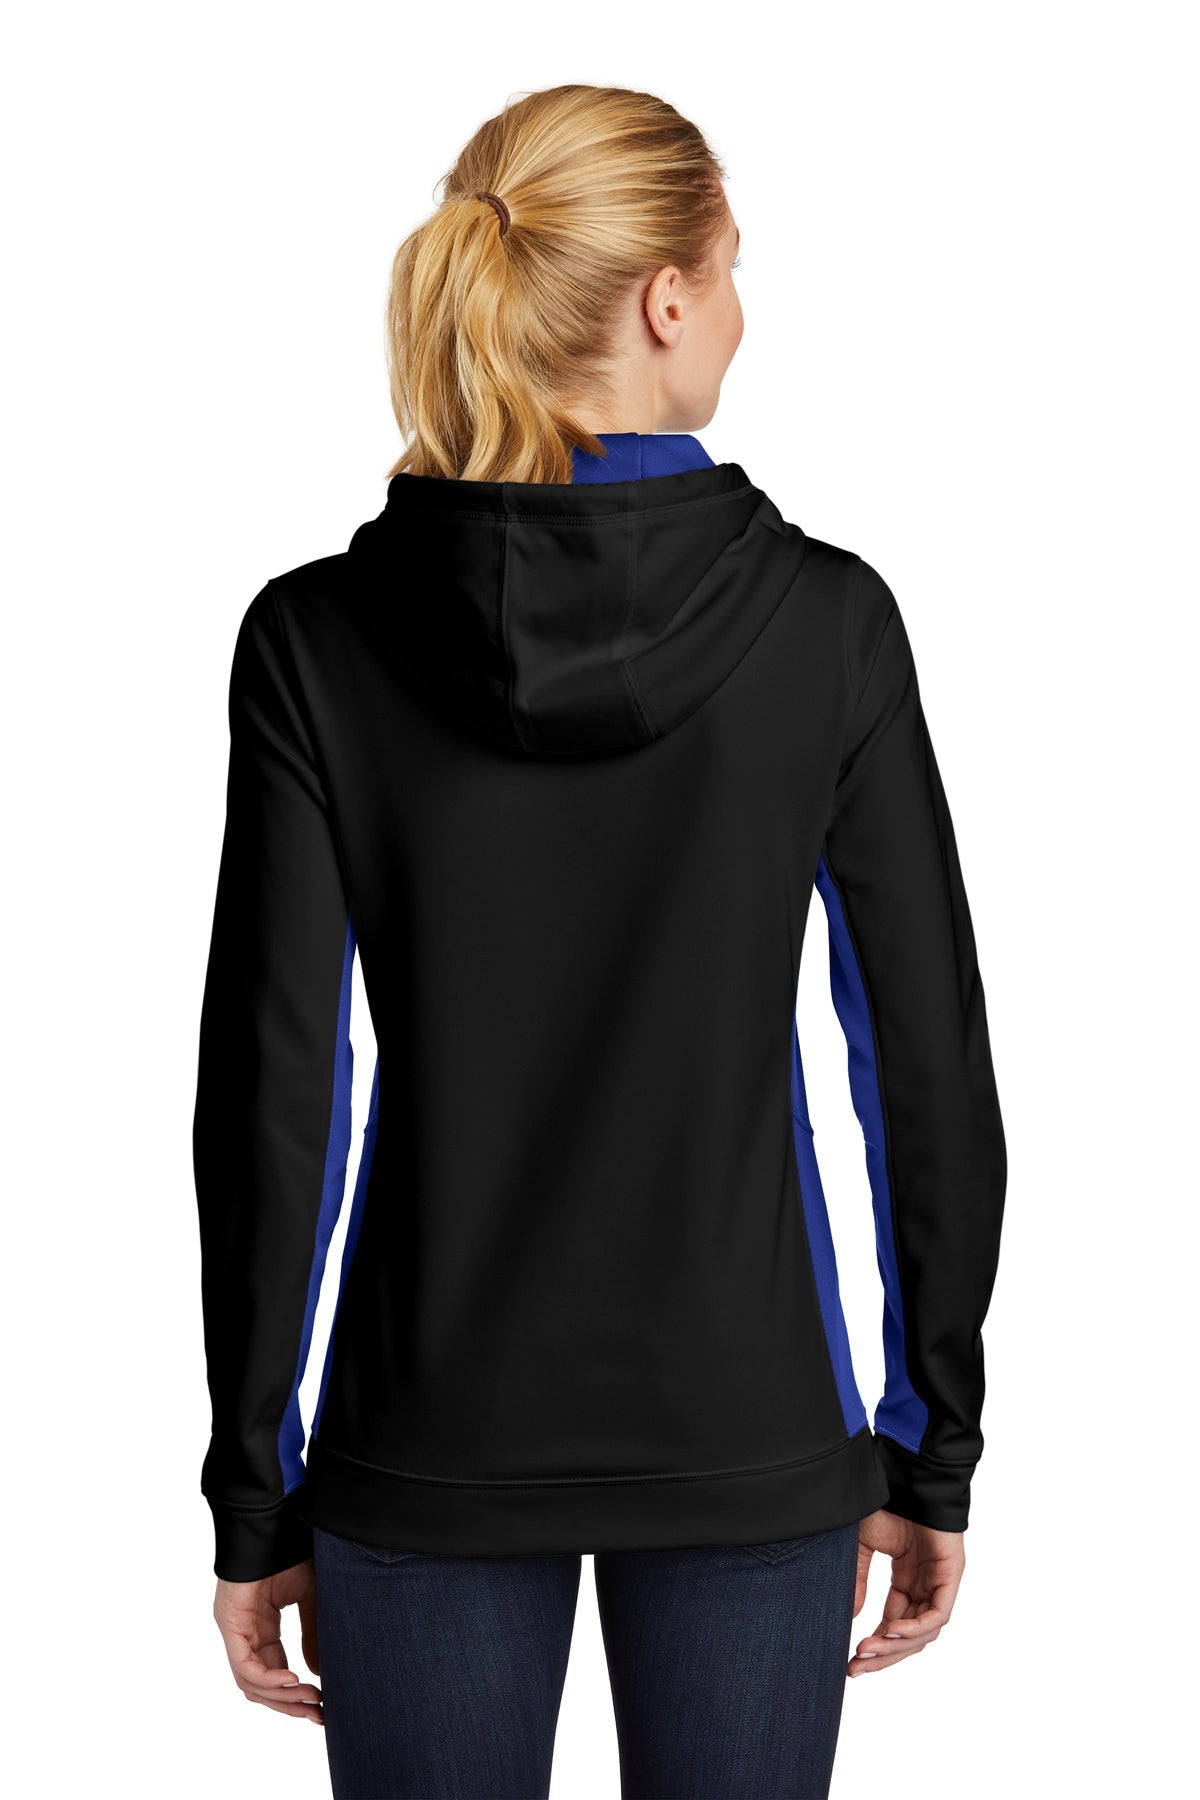 sport-tek_lst235 _black/ true royal_company_logo_sweatshirts